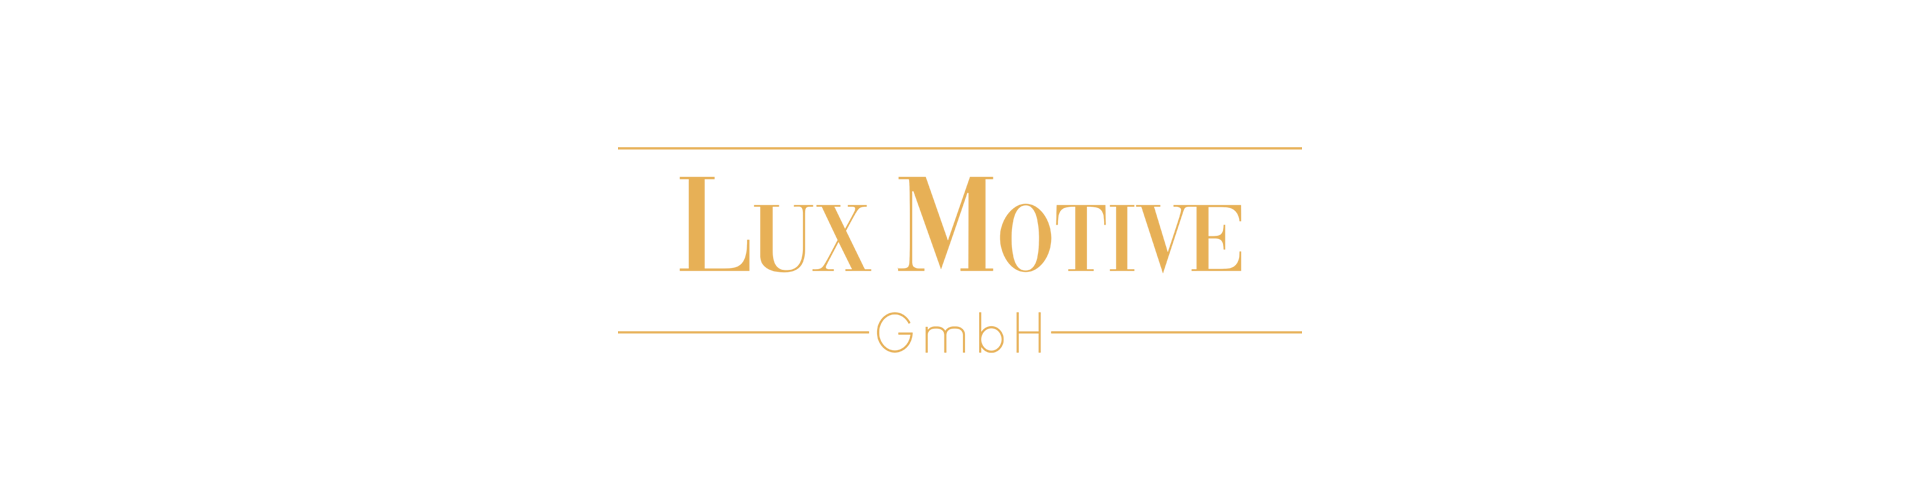 lux motive gmbh fulllogo